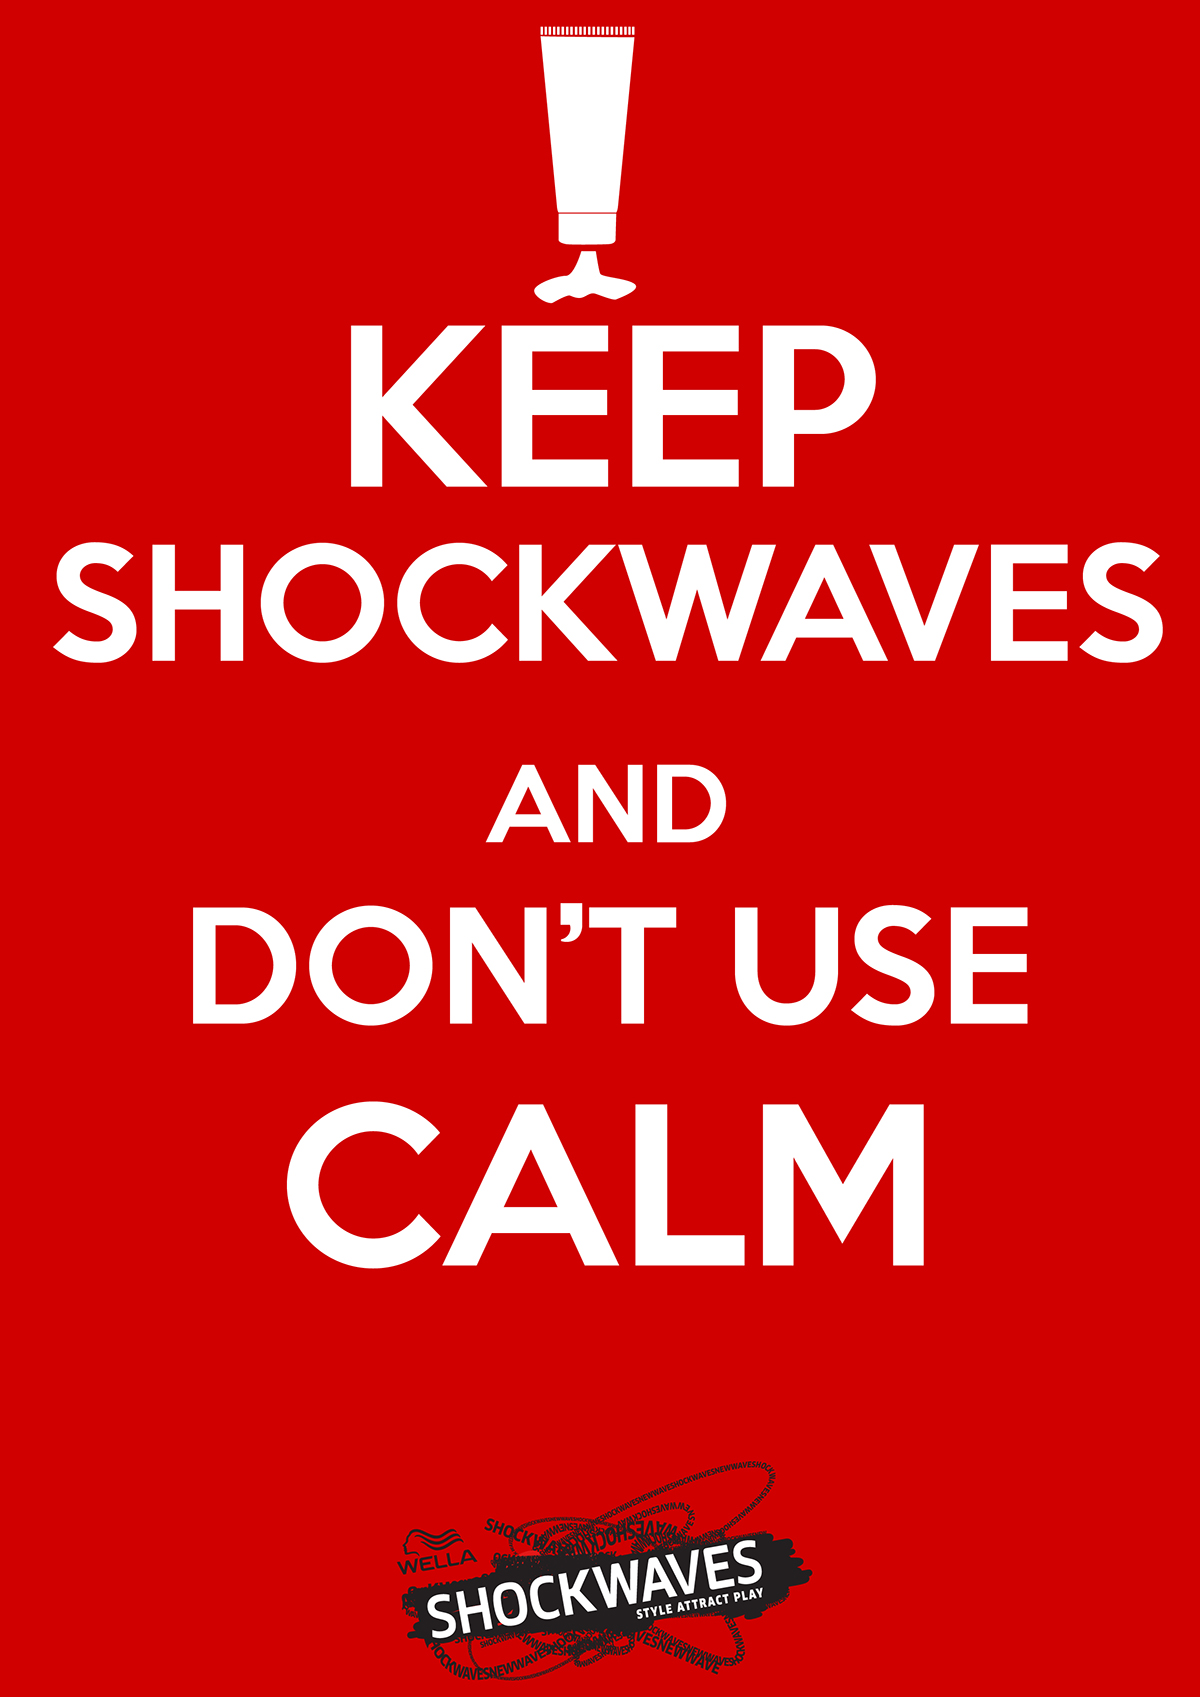 gel capelli ADV Viral Web graphic design Wella Shockwaves don't use calm